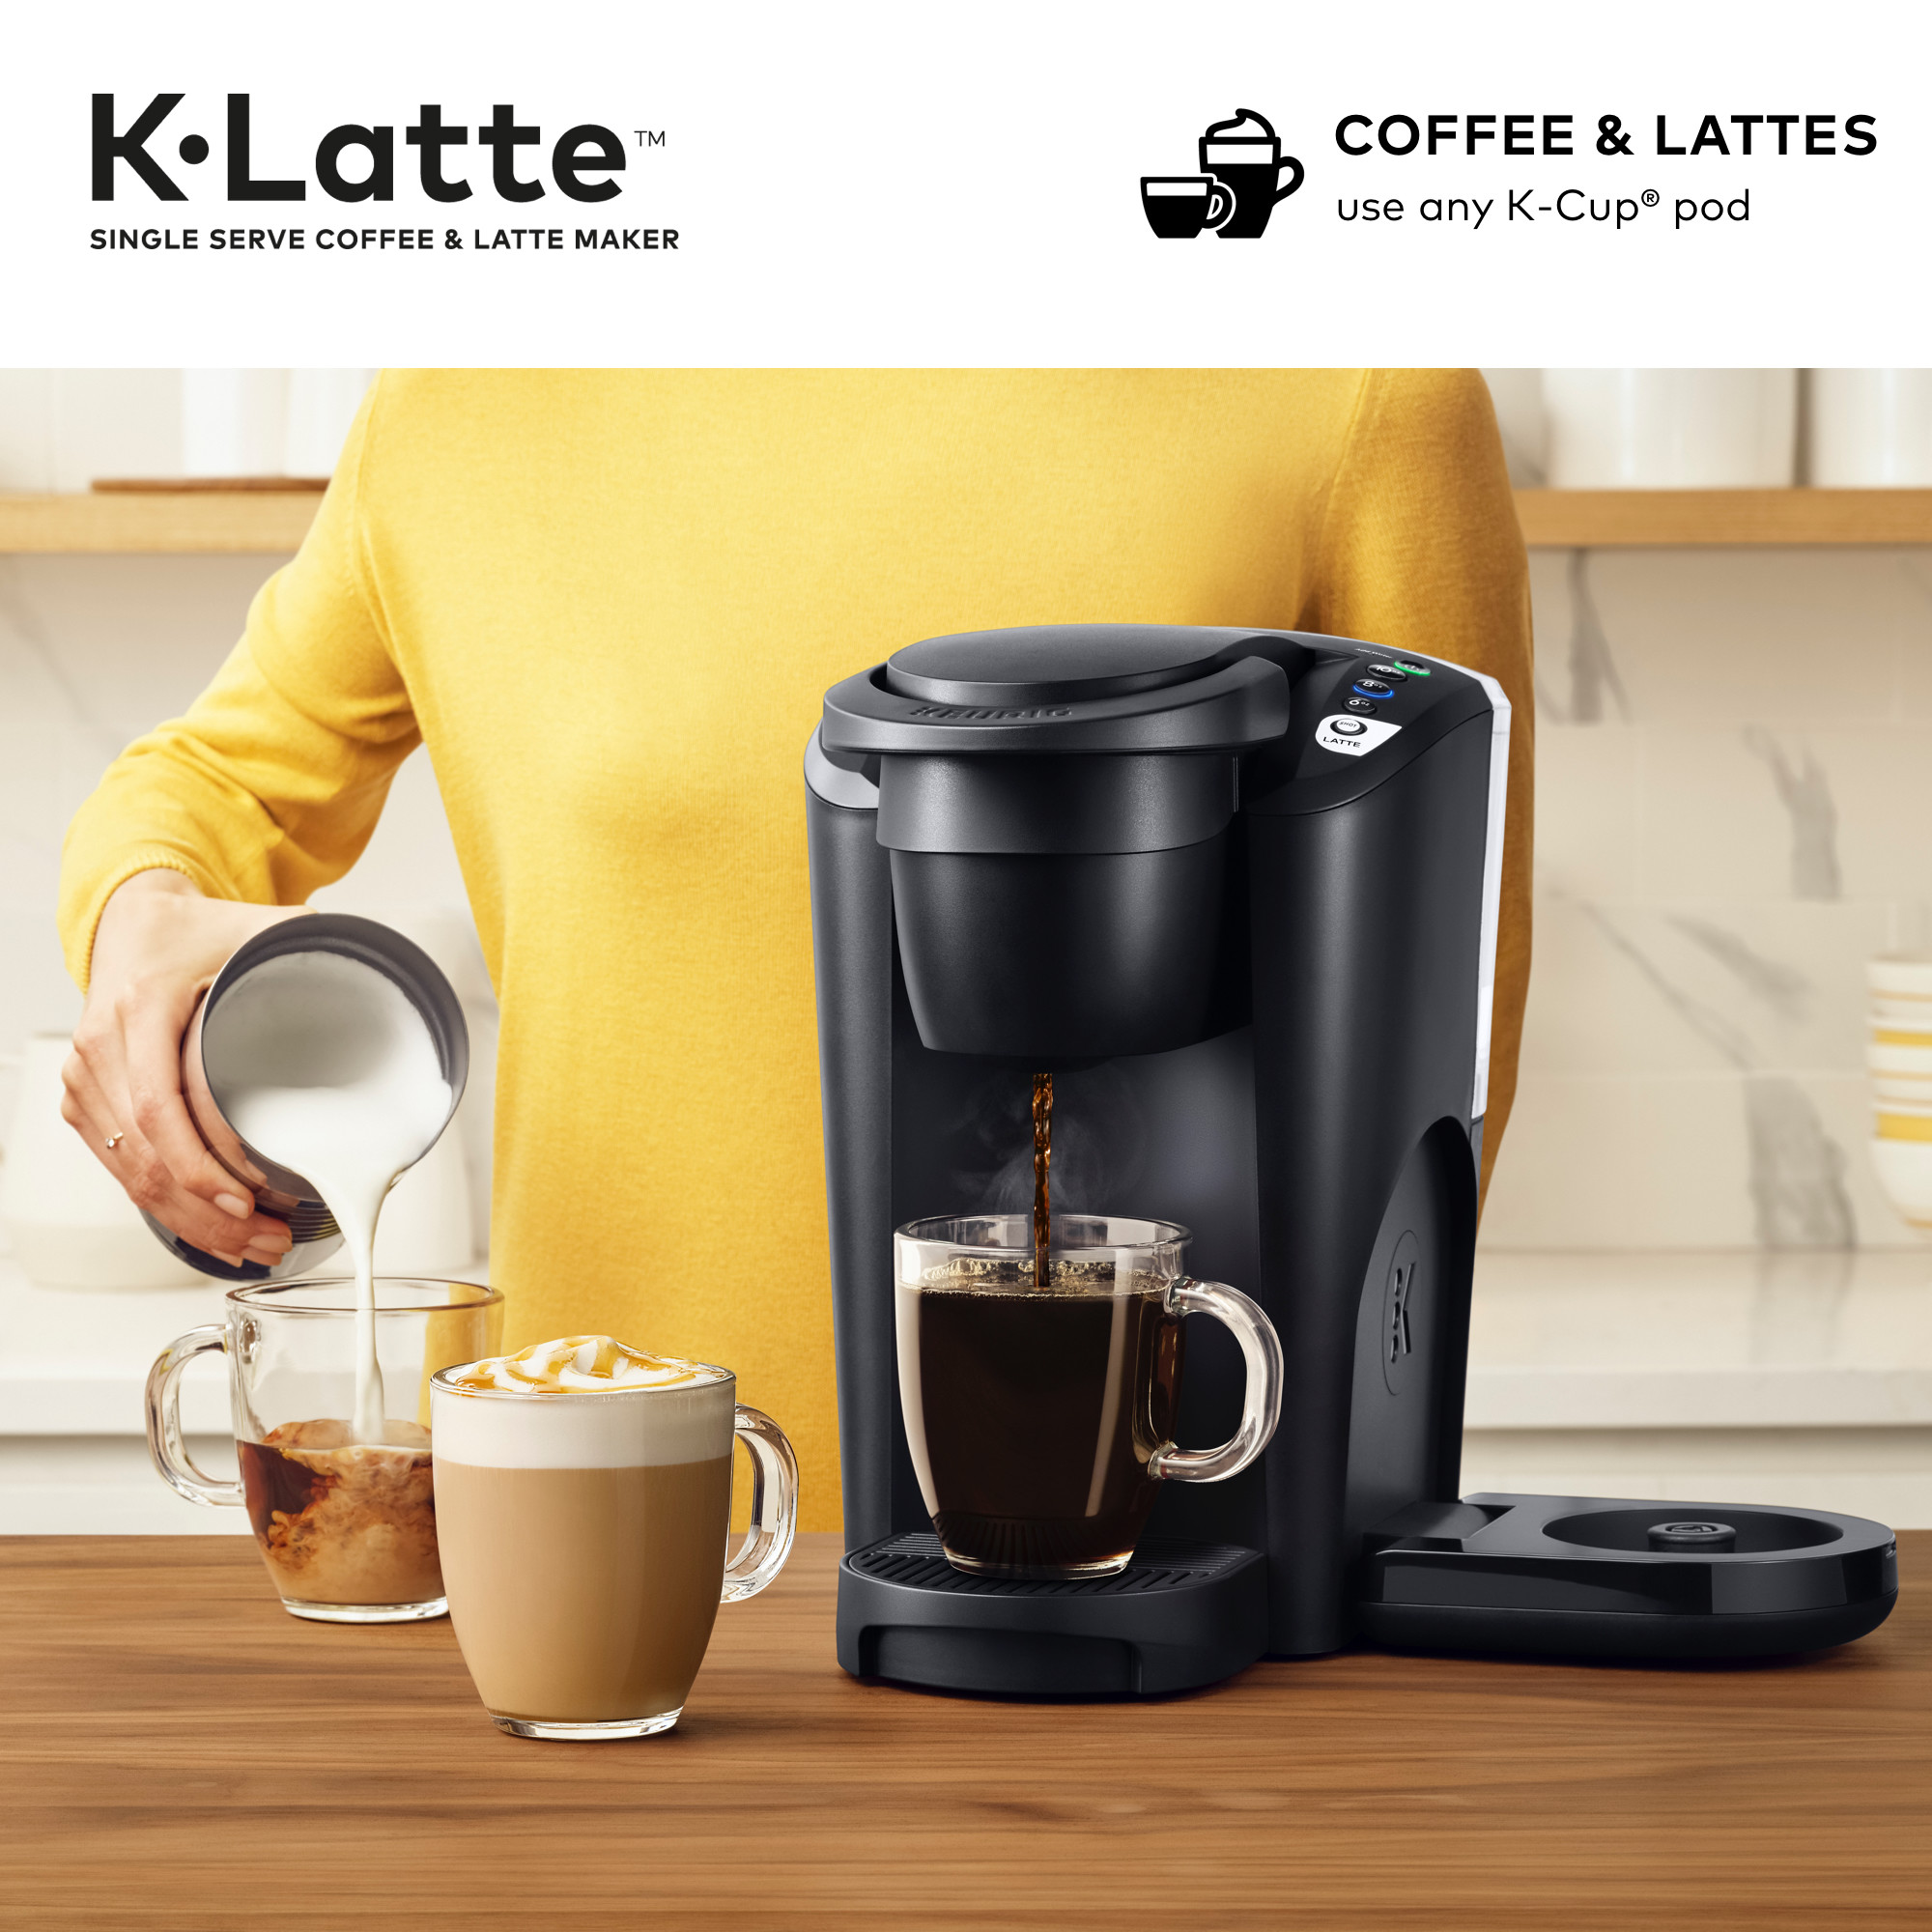 Keurig K-Latte Single Serve K-Cup Coffee and Latte Maker, Black - image 4 of 12